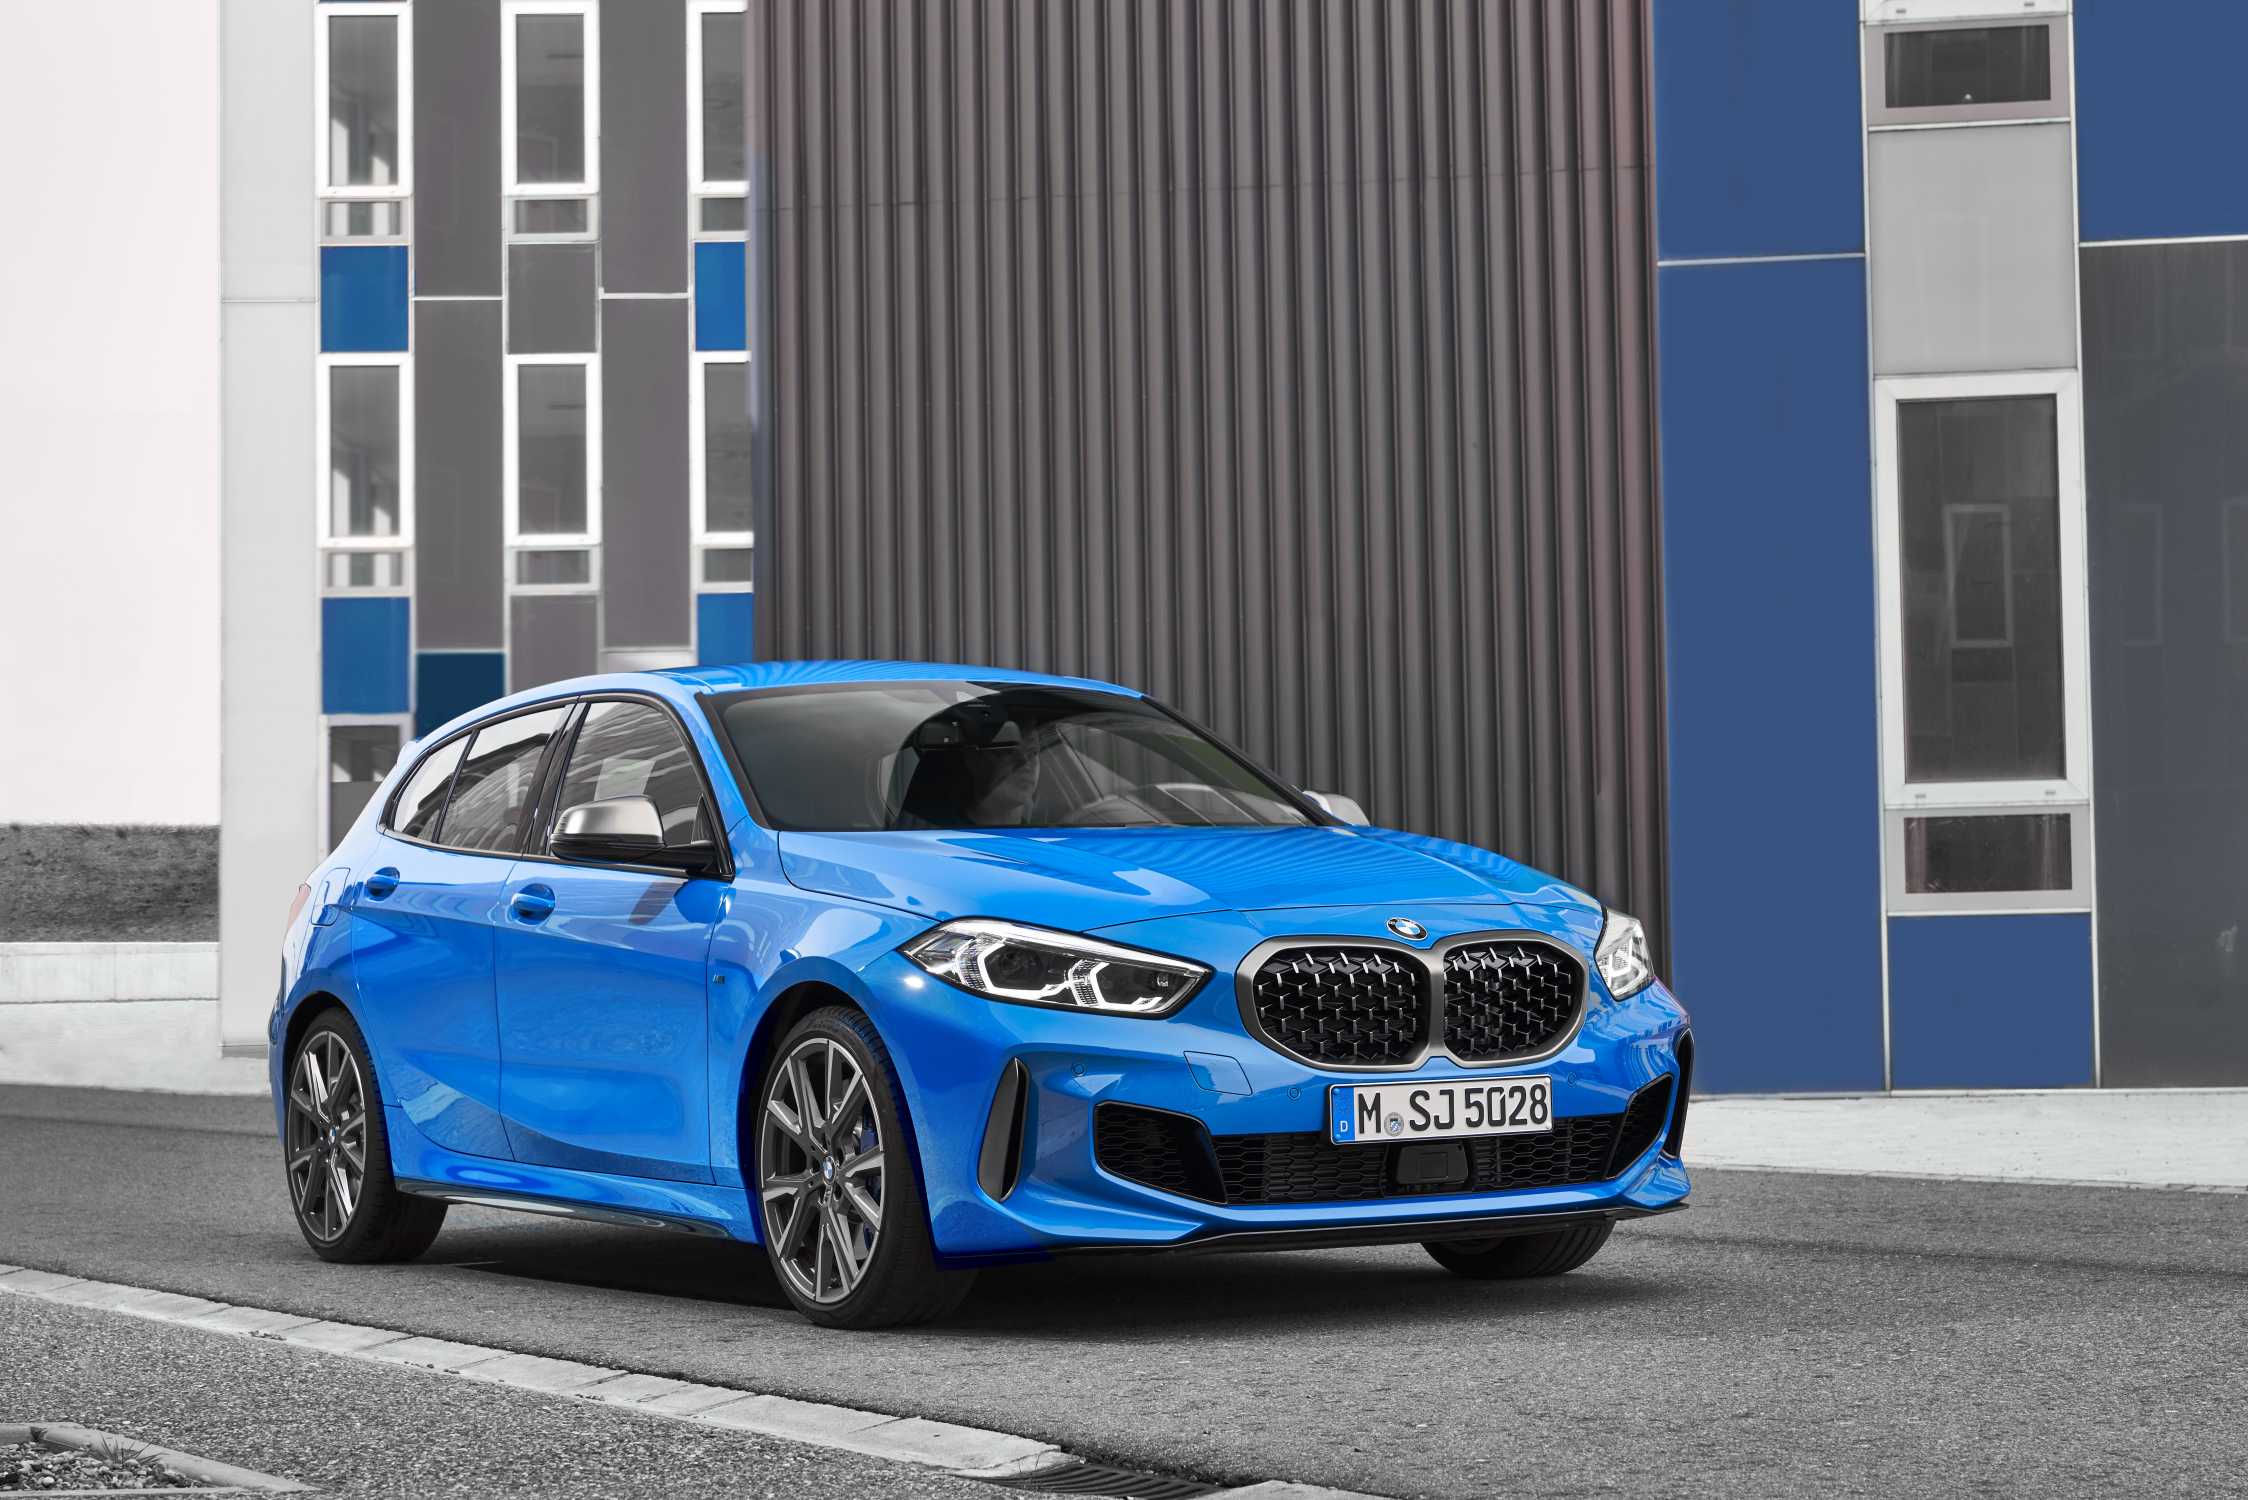 The all-new BMW 1 Series, BMW M135i xDrive, Misano blue metallic, Rim 19” Styling 557 M (05/2019).